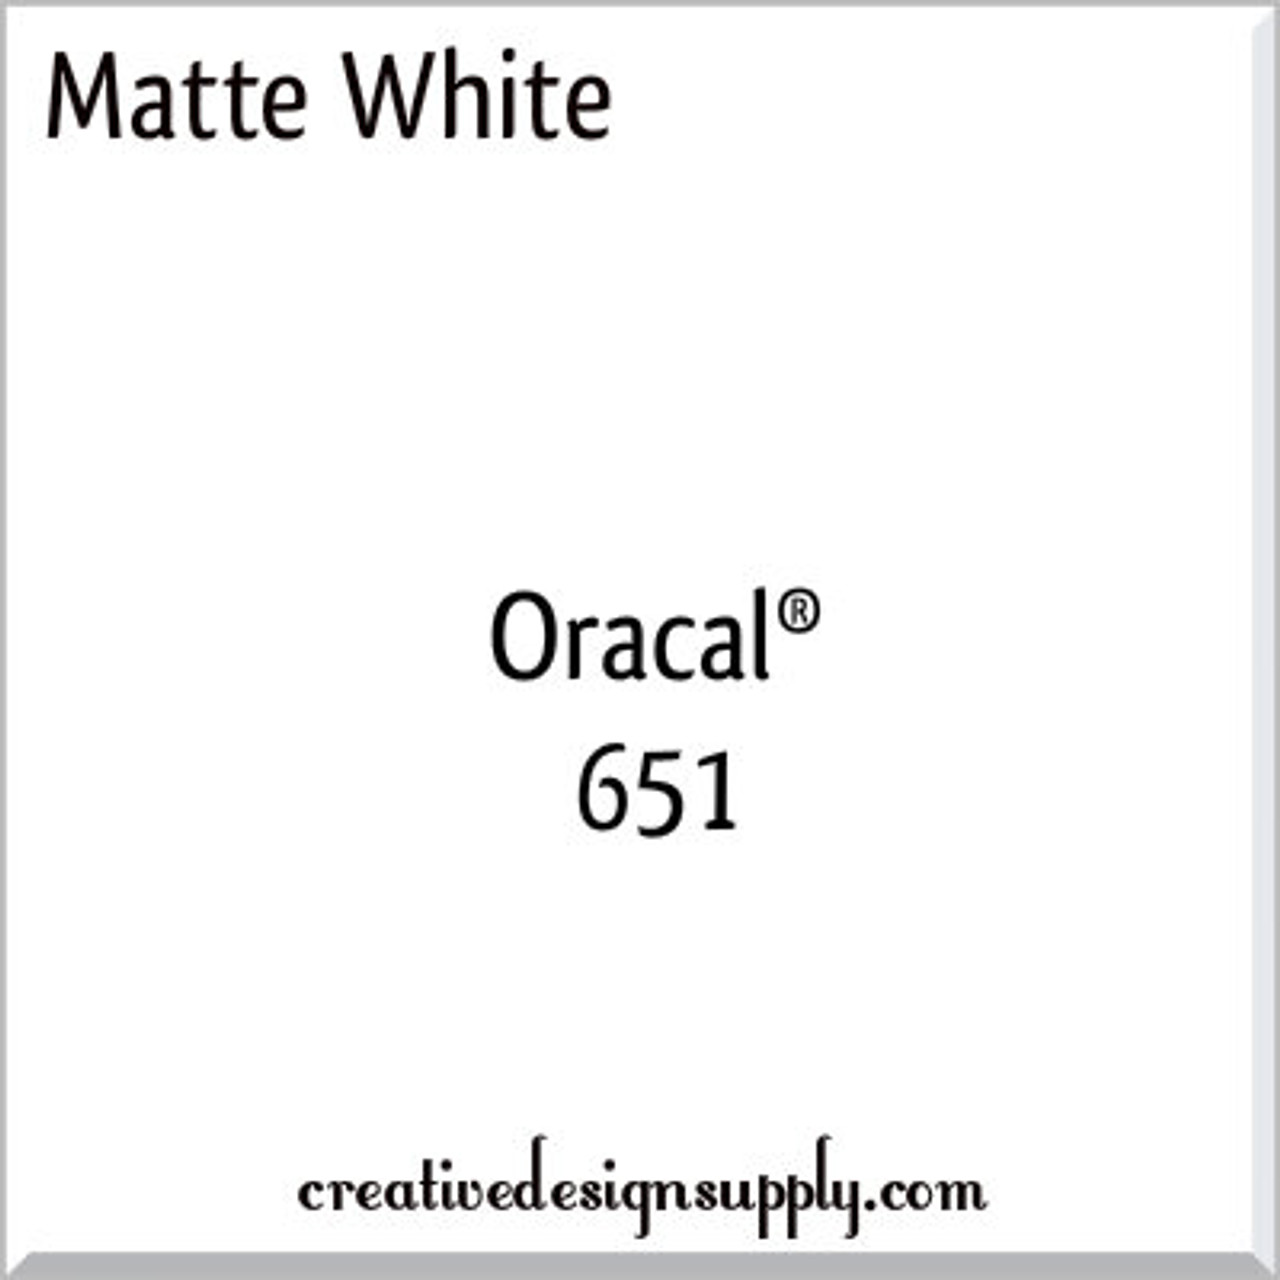 Oracal 651 Matte White